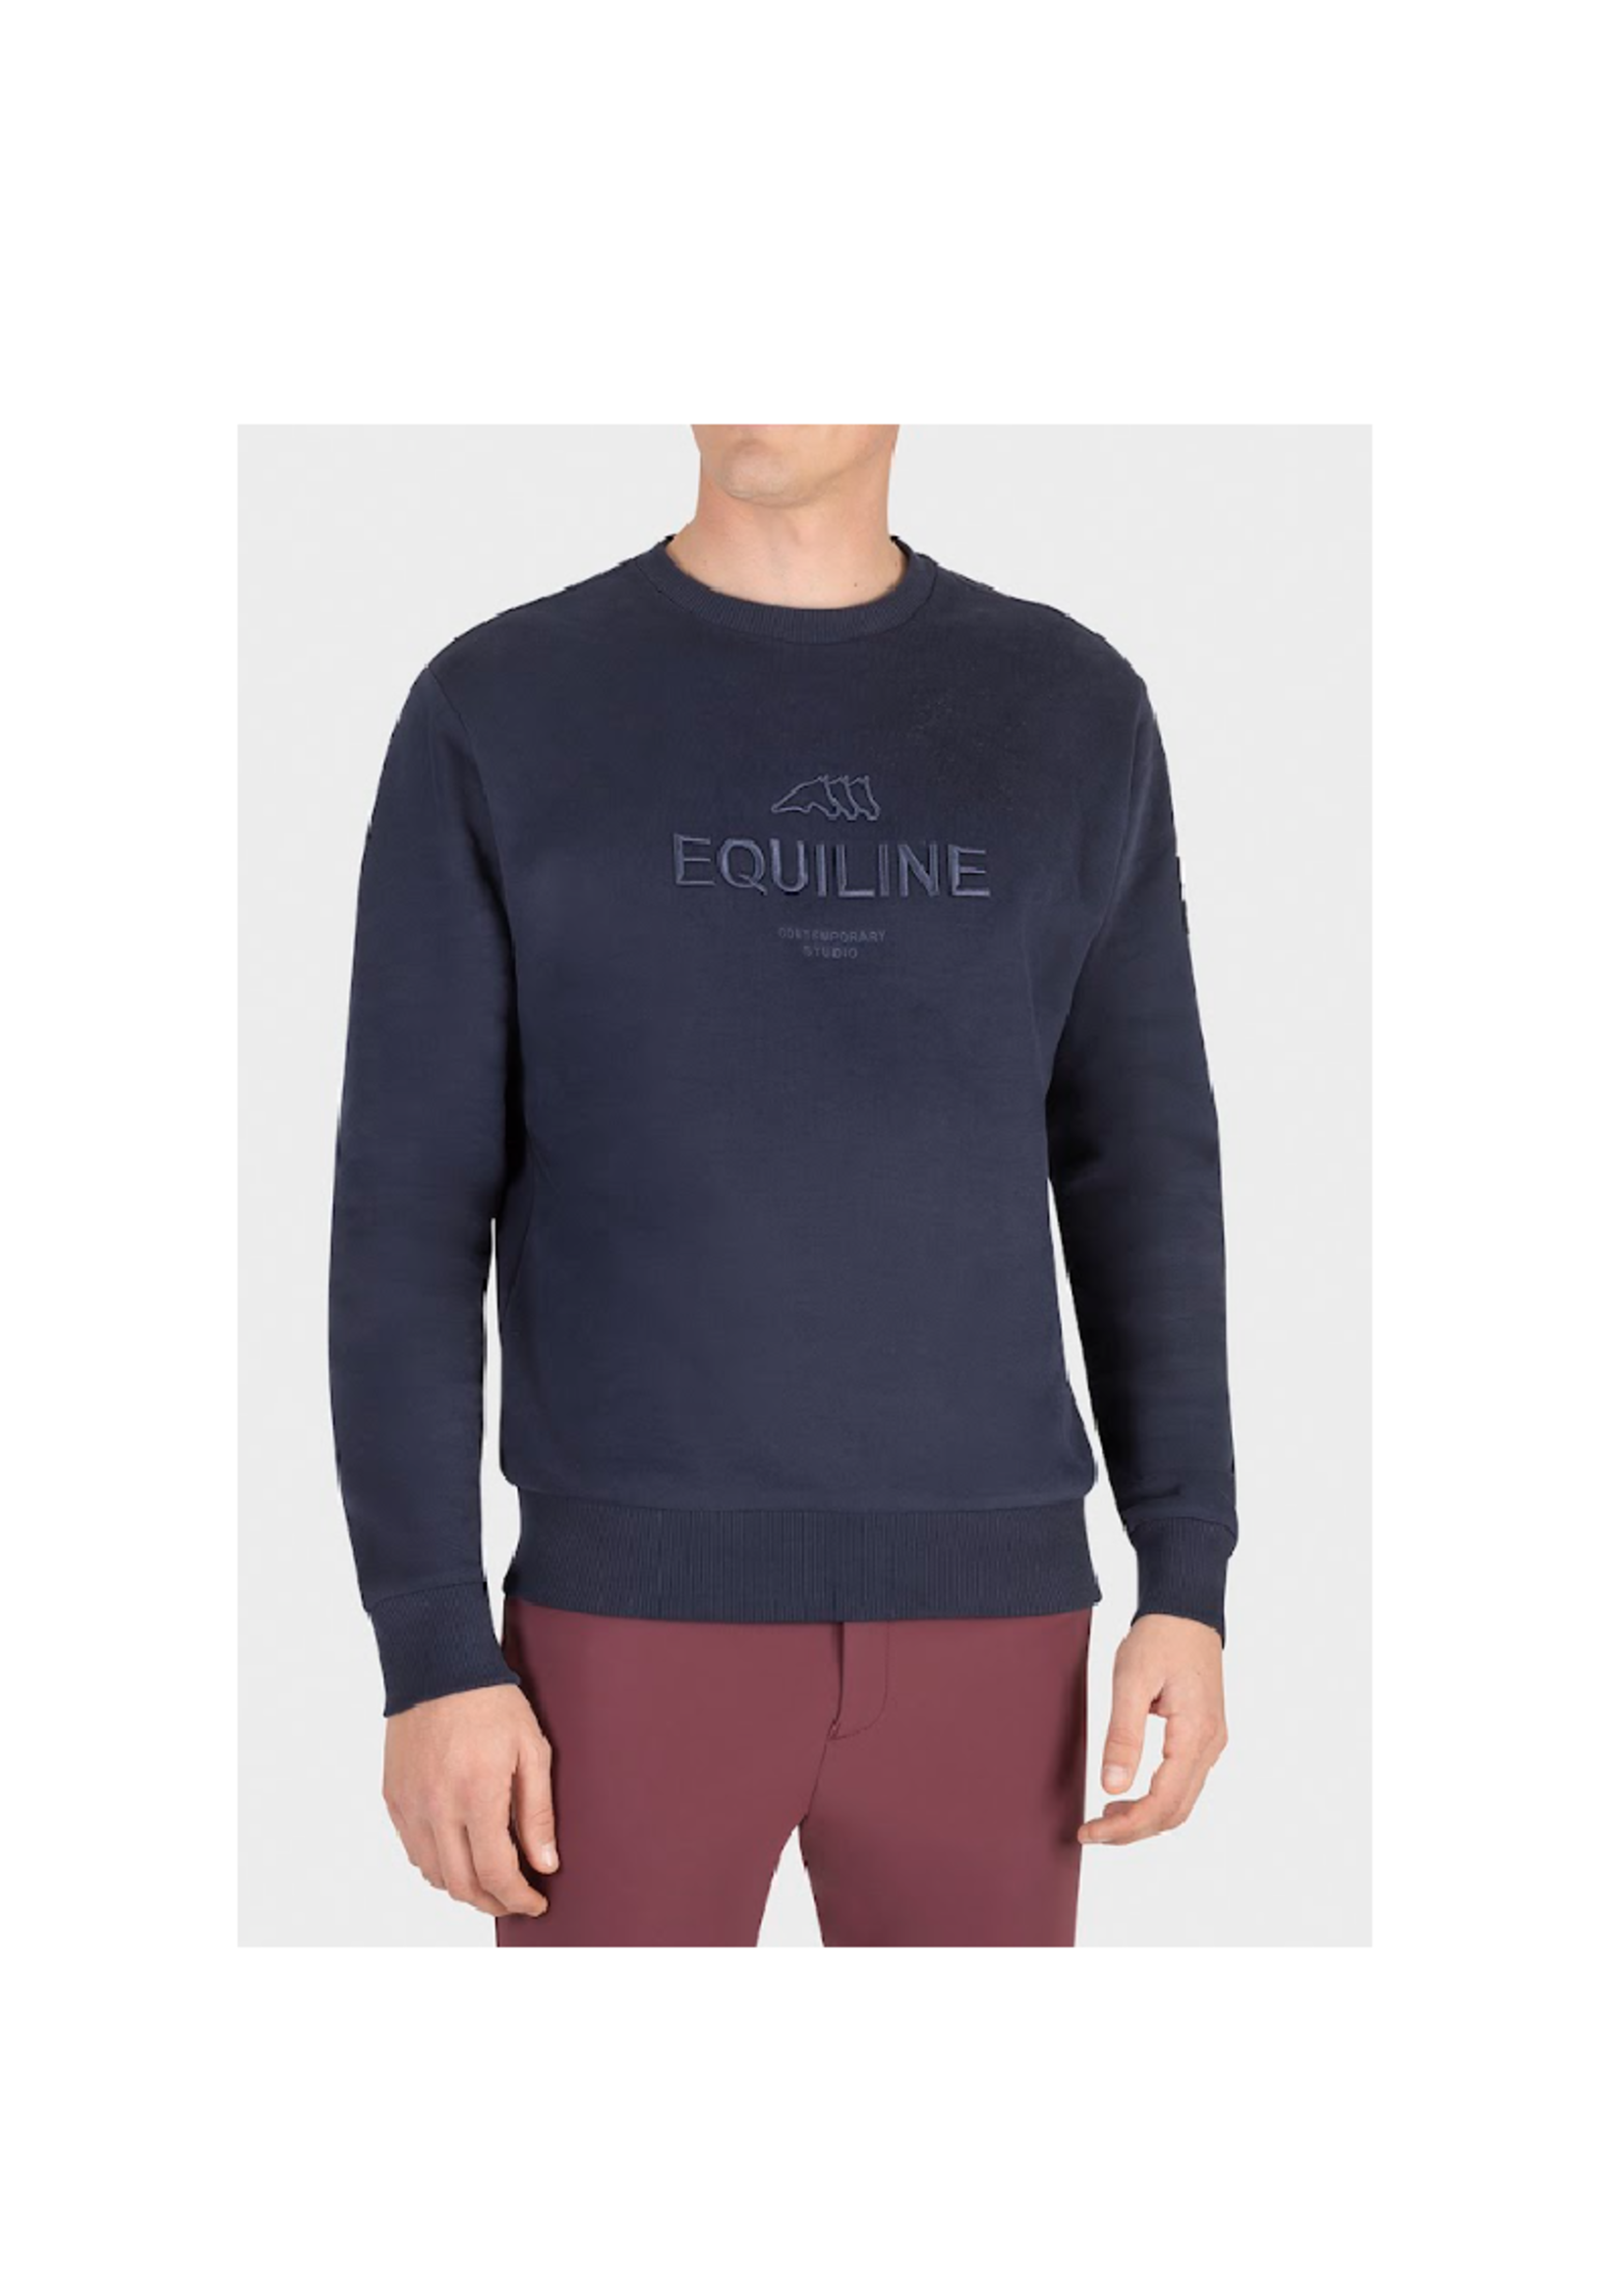 Equiline Equiline Caricoc Unisex  Sweater